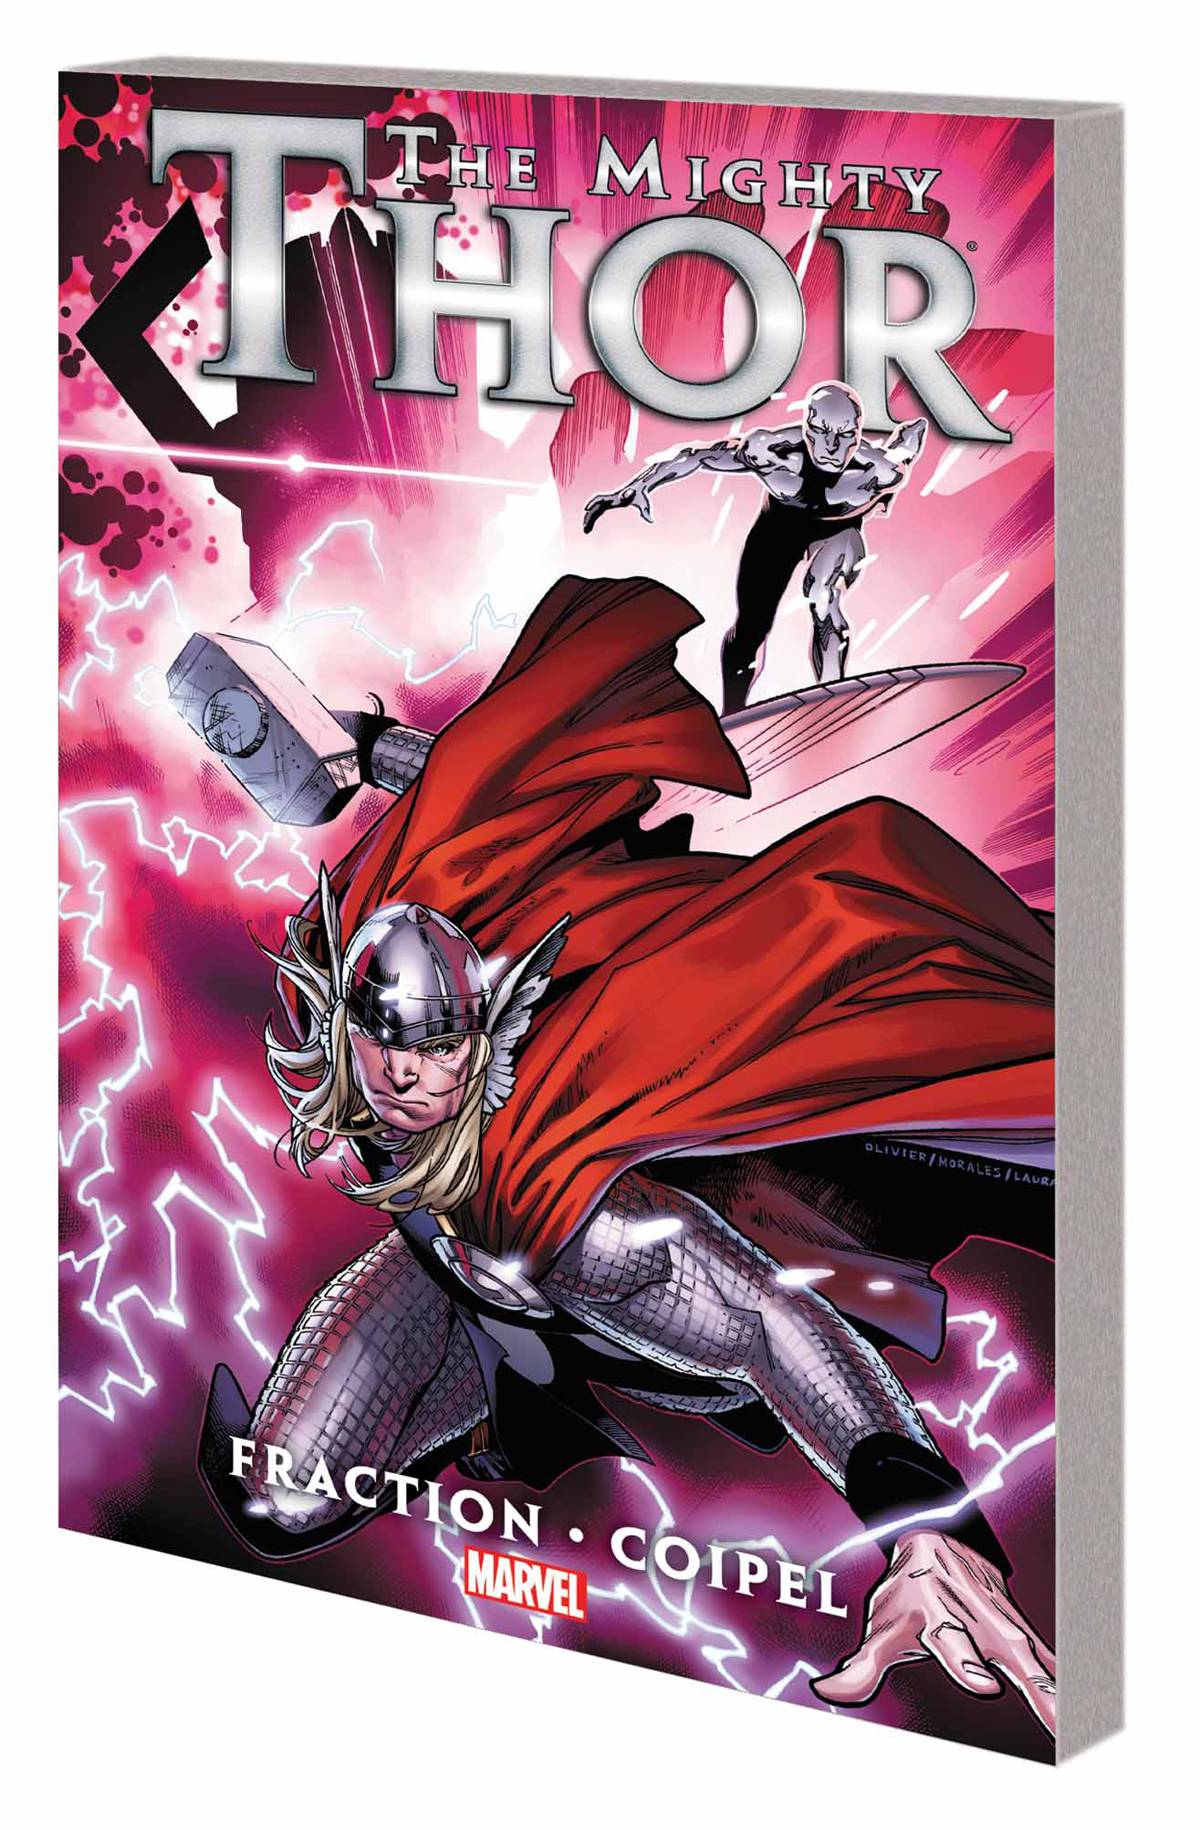 Mighty Thor by Matt Fraction Graphic Novel Volume 1